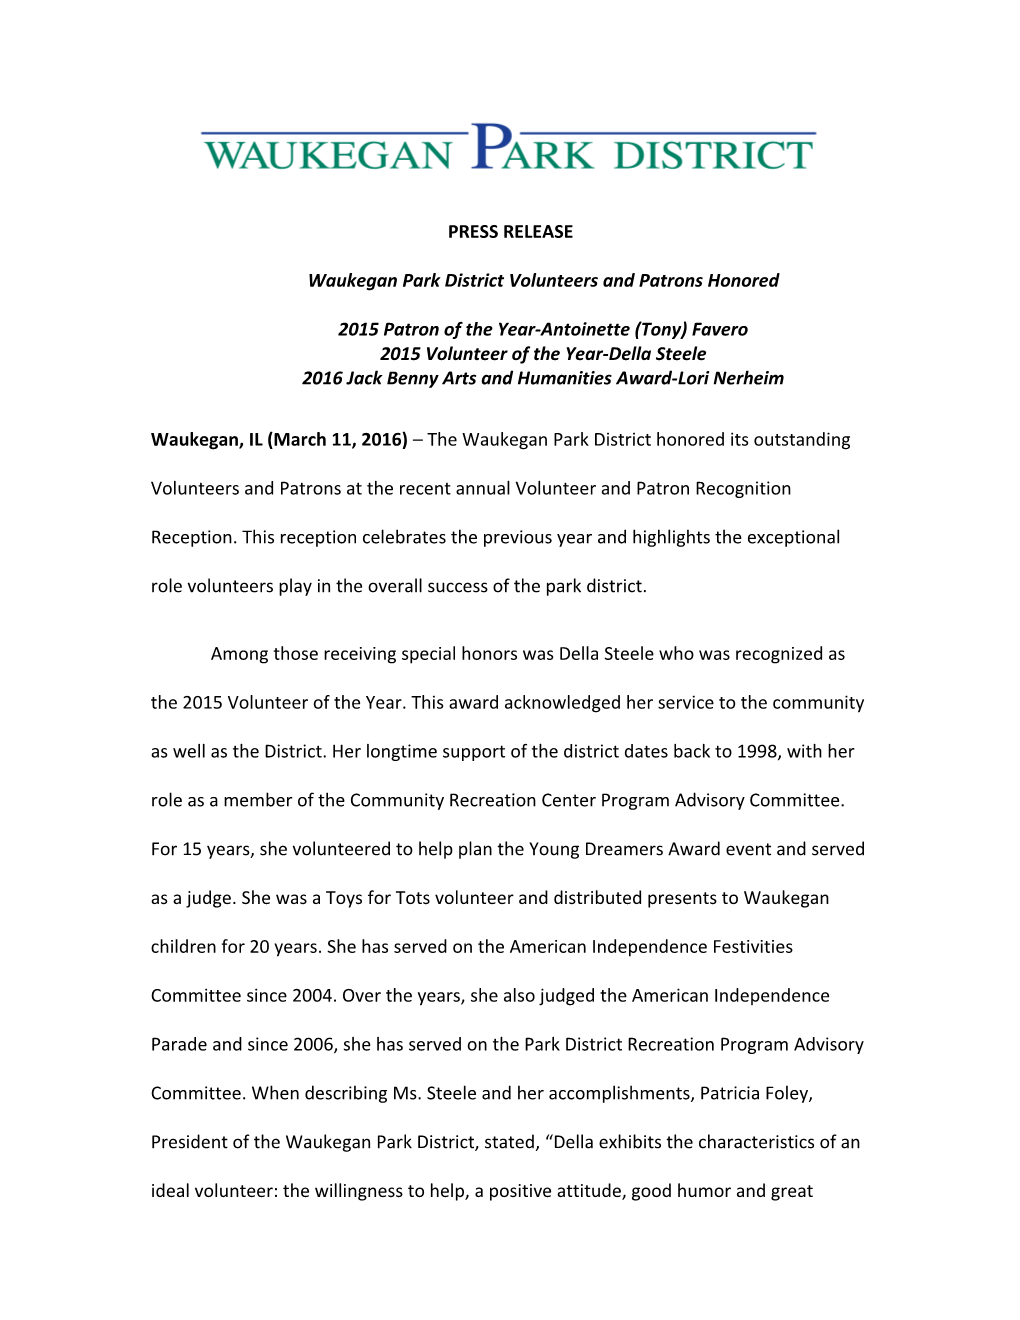 Waukegan Park District Volunteers and Patrons Honored